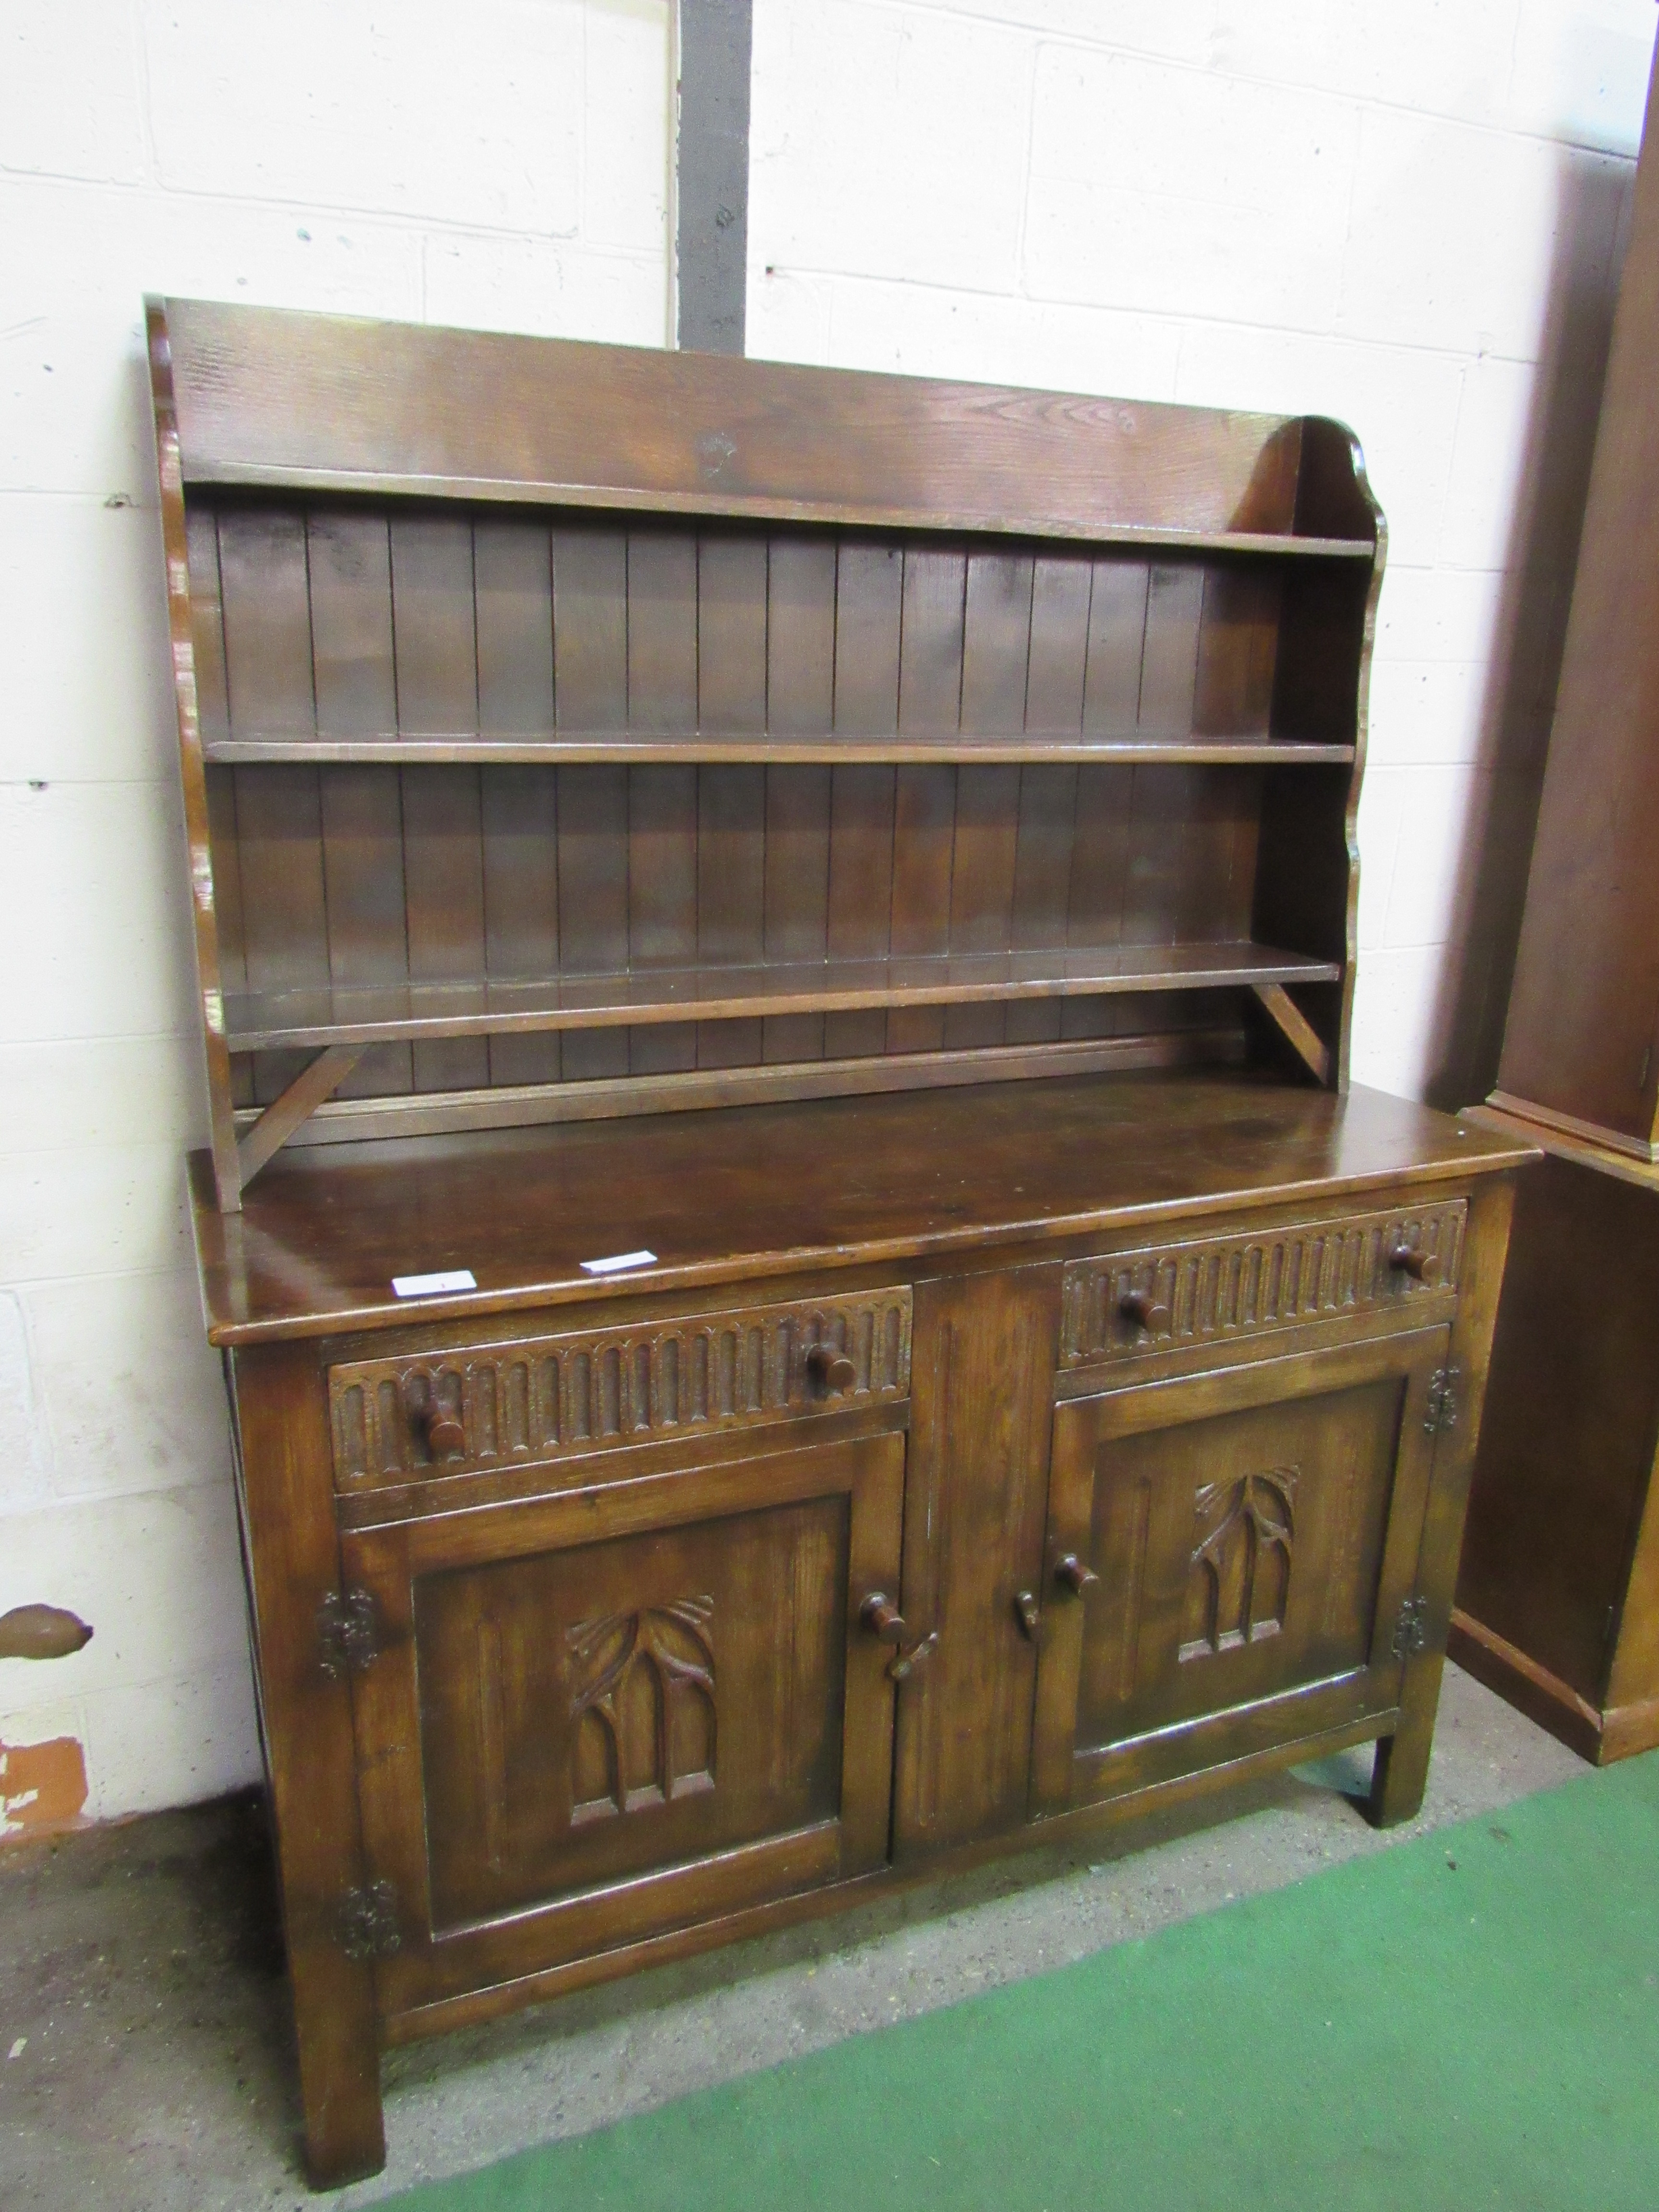 Oak dresser 2 drawers above 2 cupboards, 141 x 49 x 172cms. Estimate £30-40.